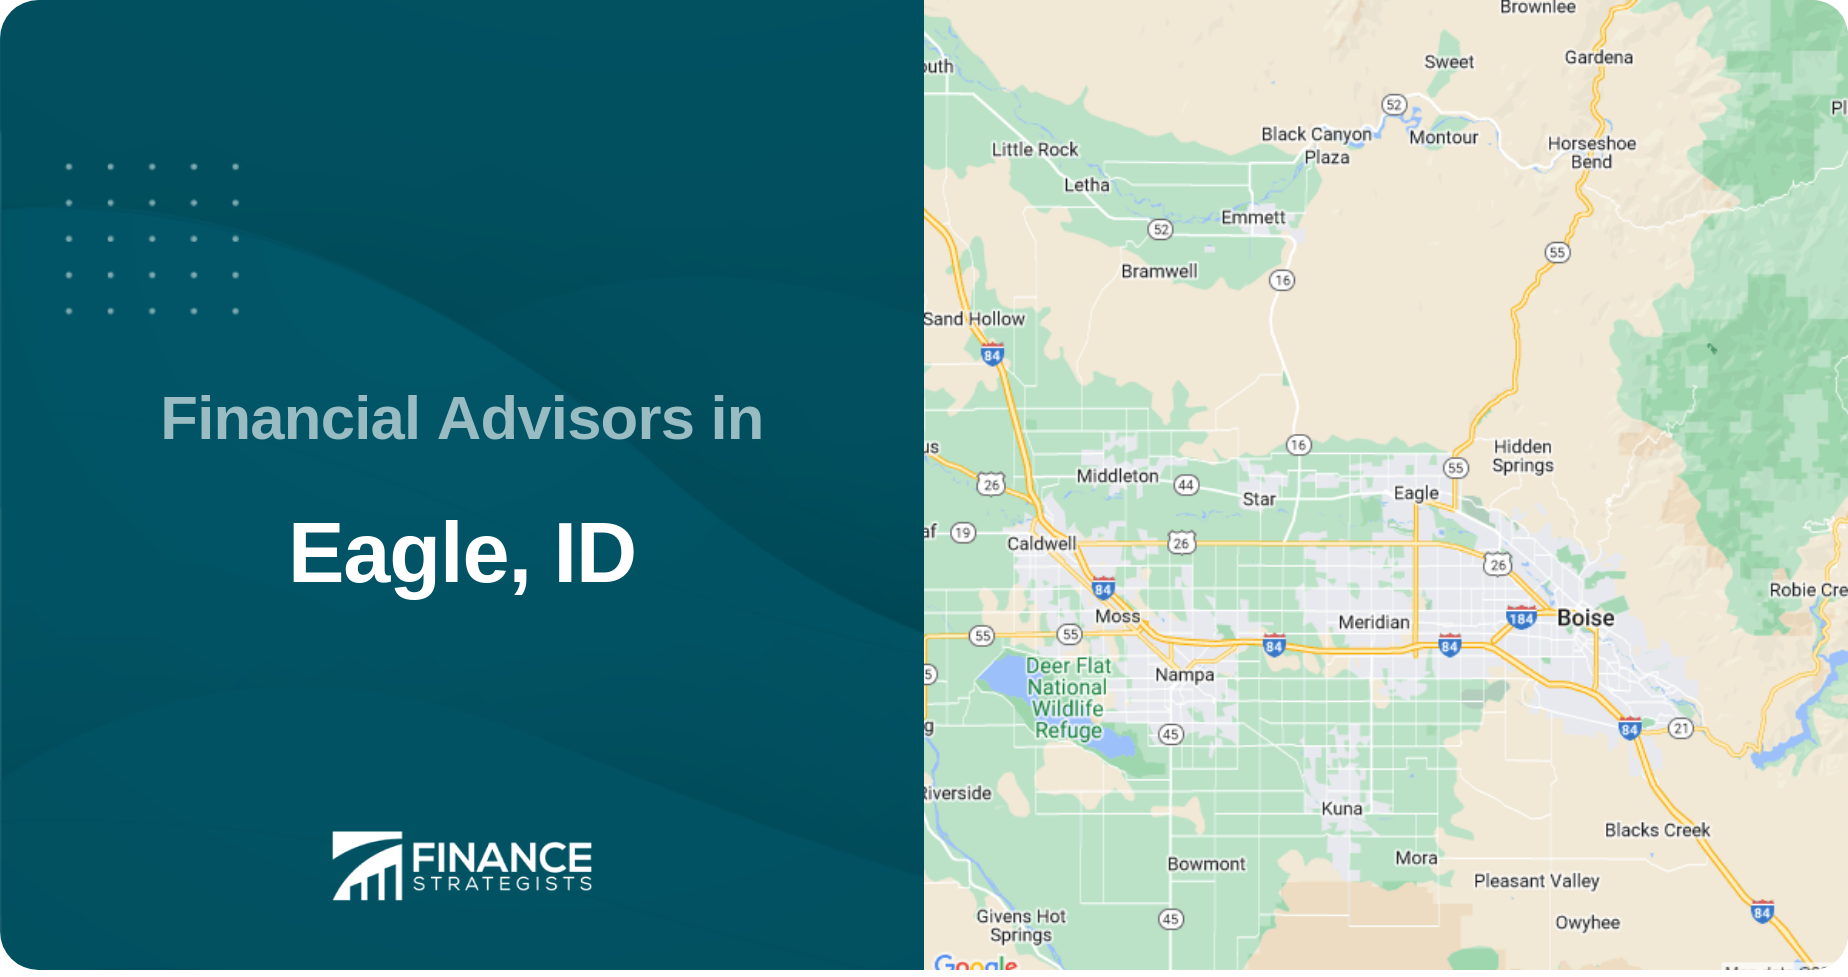 Financial Advisors in Eagle, ID